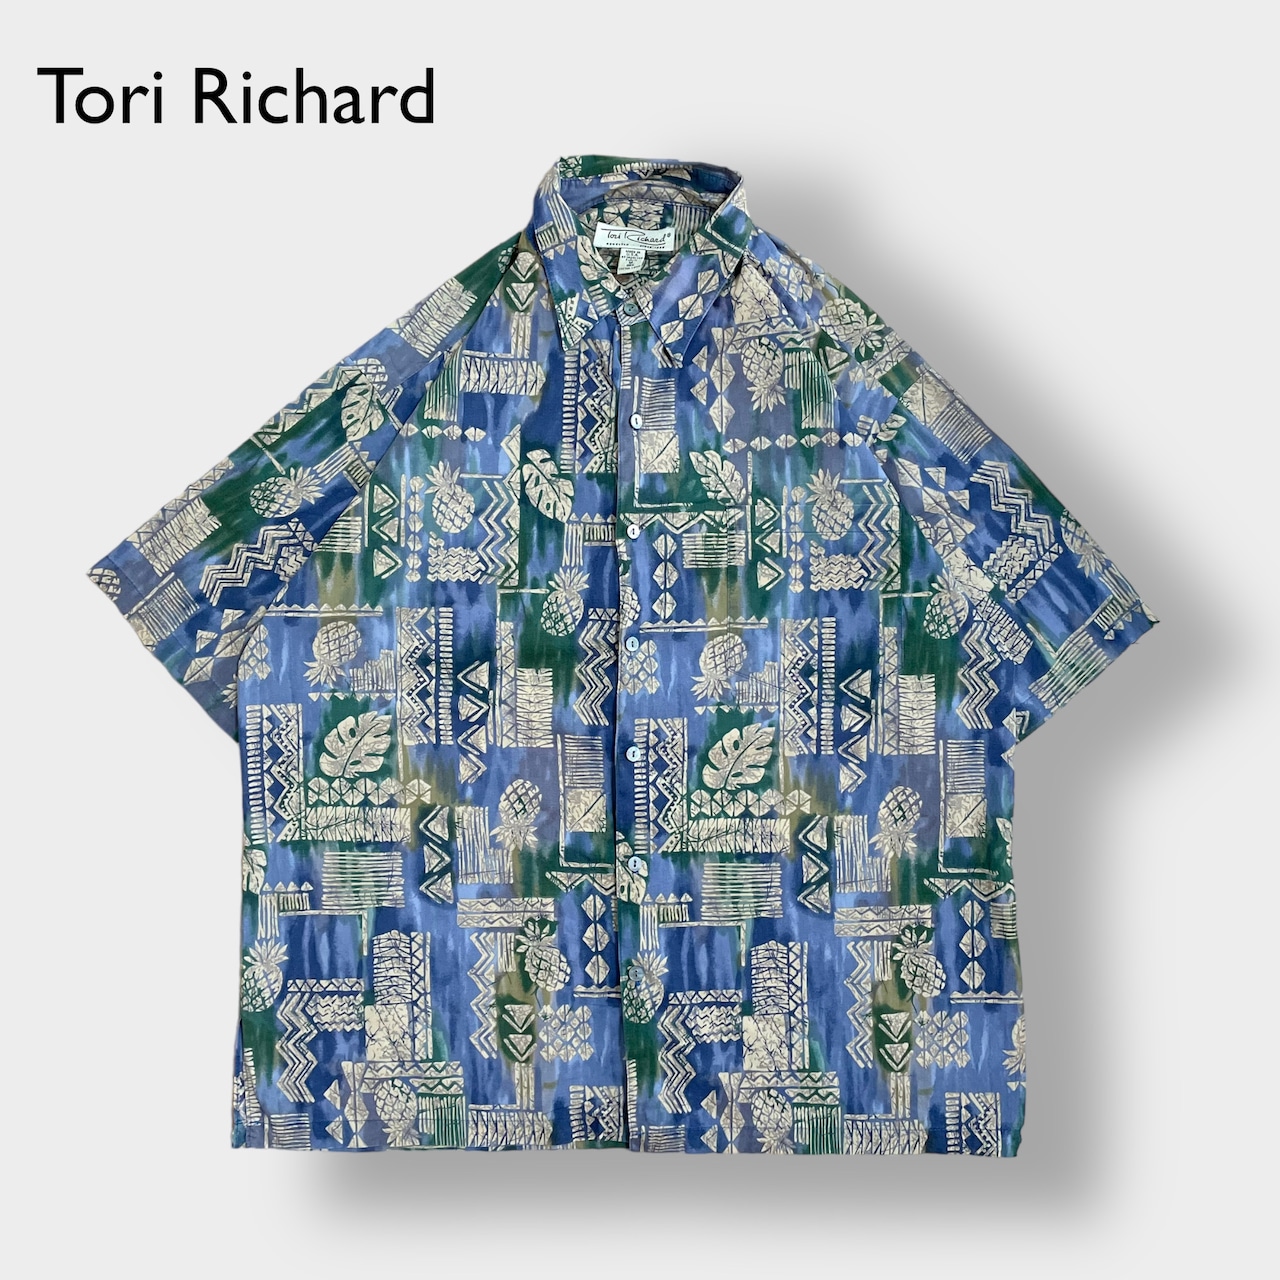 【Tori Richard】USA製 アロハシャツ ハワイアンシャツ 半袖シャツ 個性的 柄シャツ 総柄 柄物 オールパターン パイナップル コットン MEDIUM トリリチャード US古着